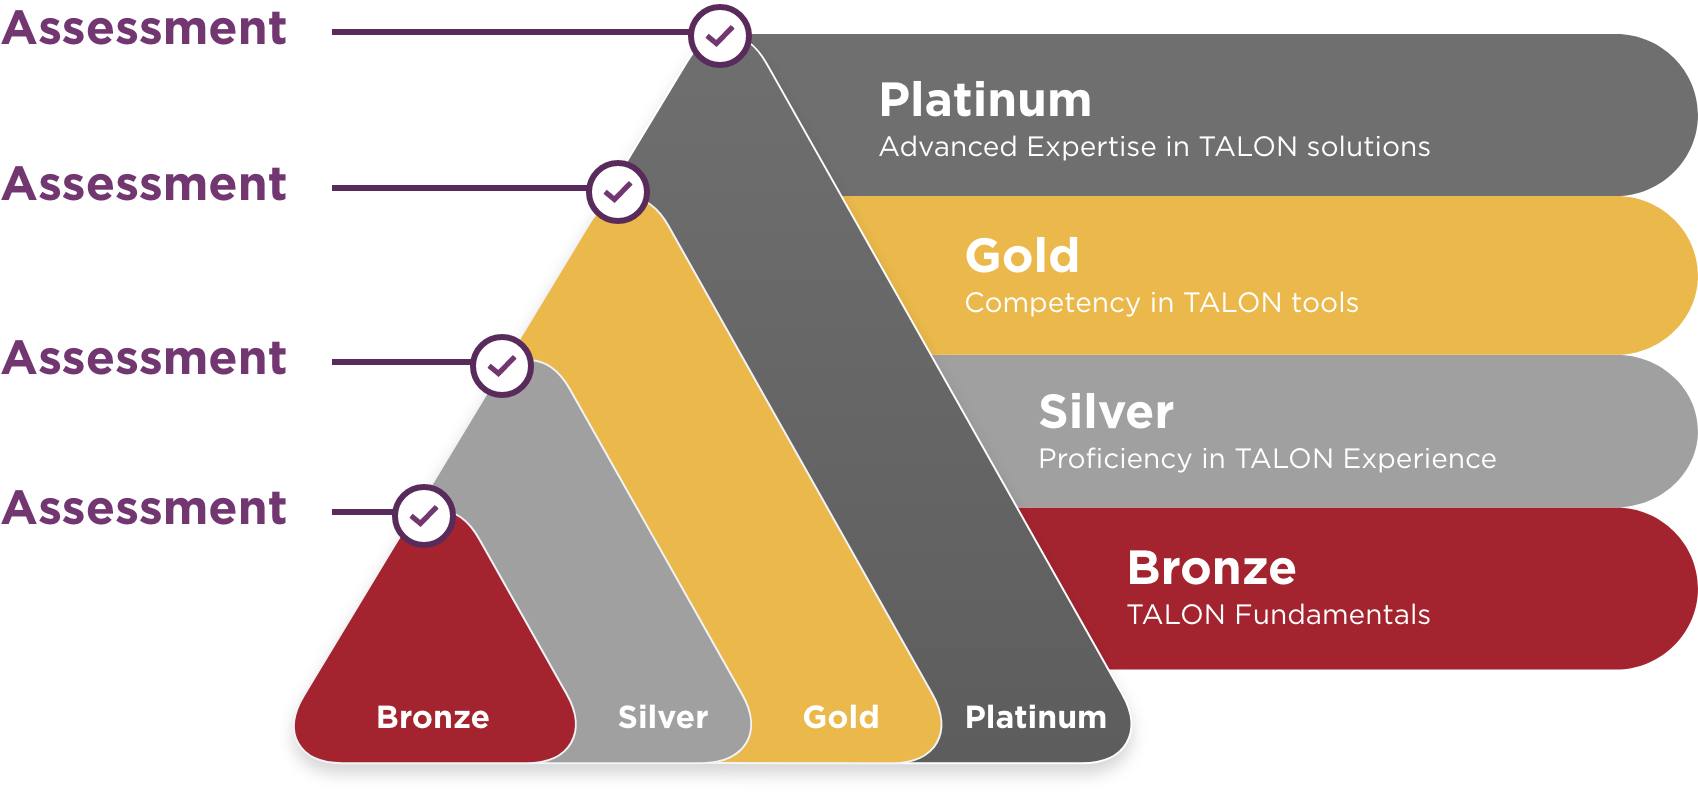 Bronze - Talon Fundamentals, Silver - Proficiency in Talon experience, Gold - Competency in TALON tools, Platinum - Advanced expertise in TALON Solutions